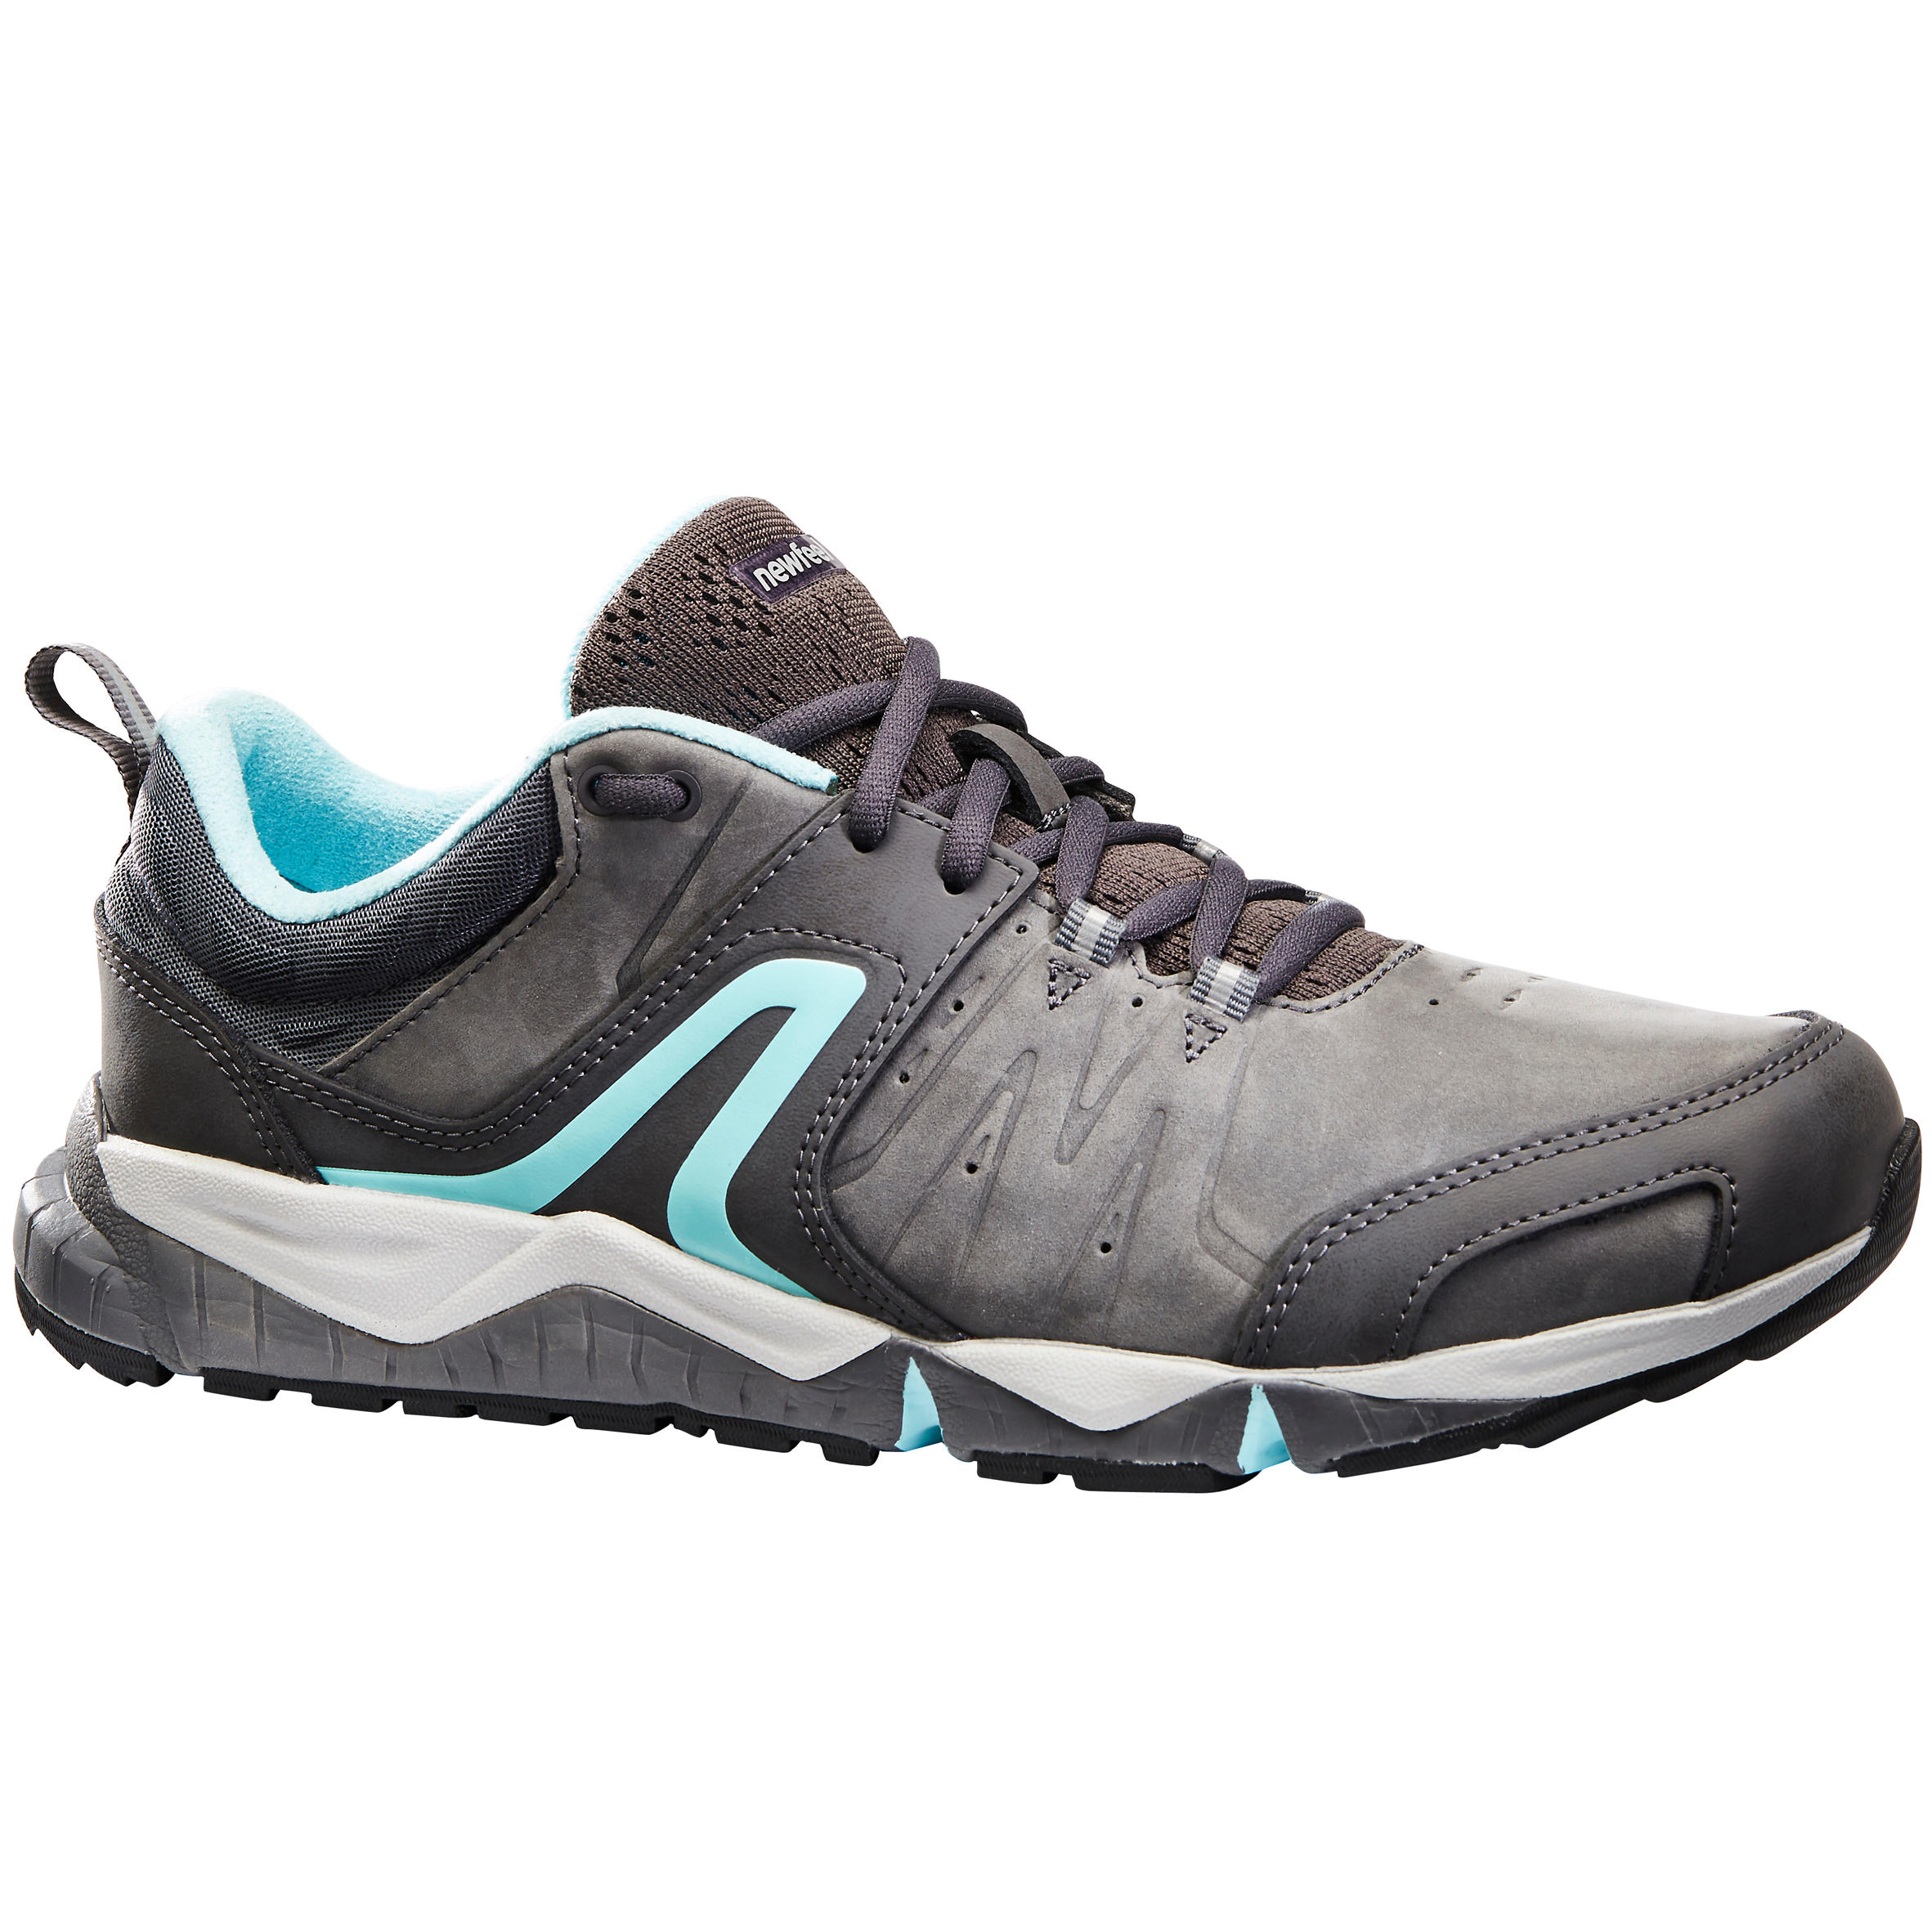 PW 940 Propulse Motion Women's Fitness Walking Shoes leather grey/blue 1/10